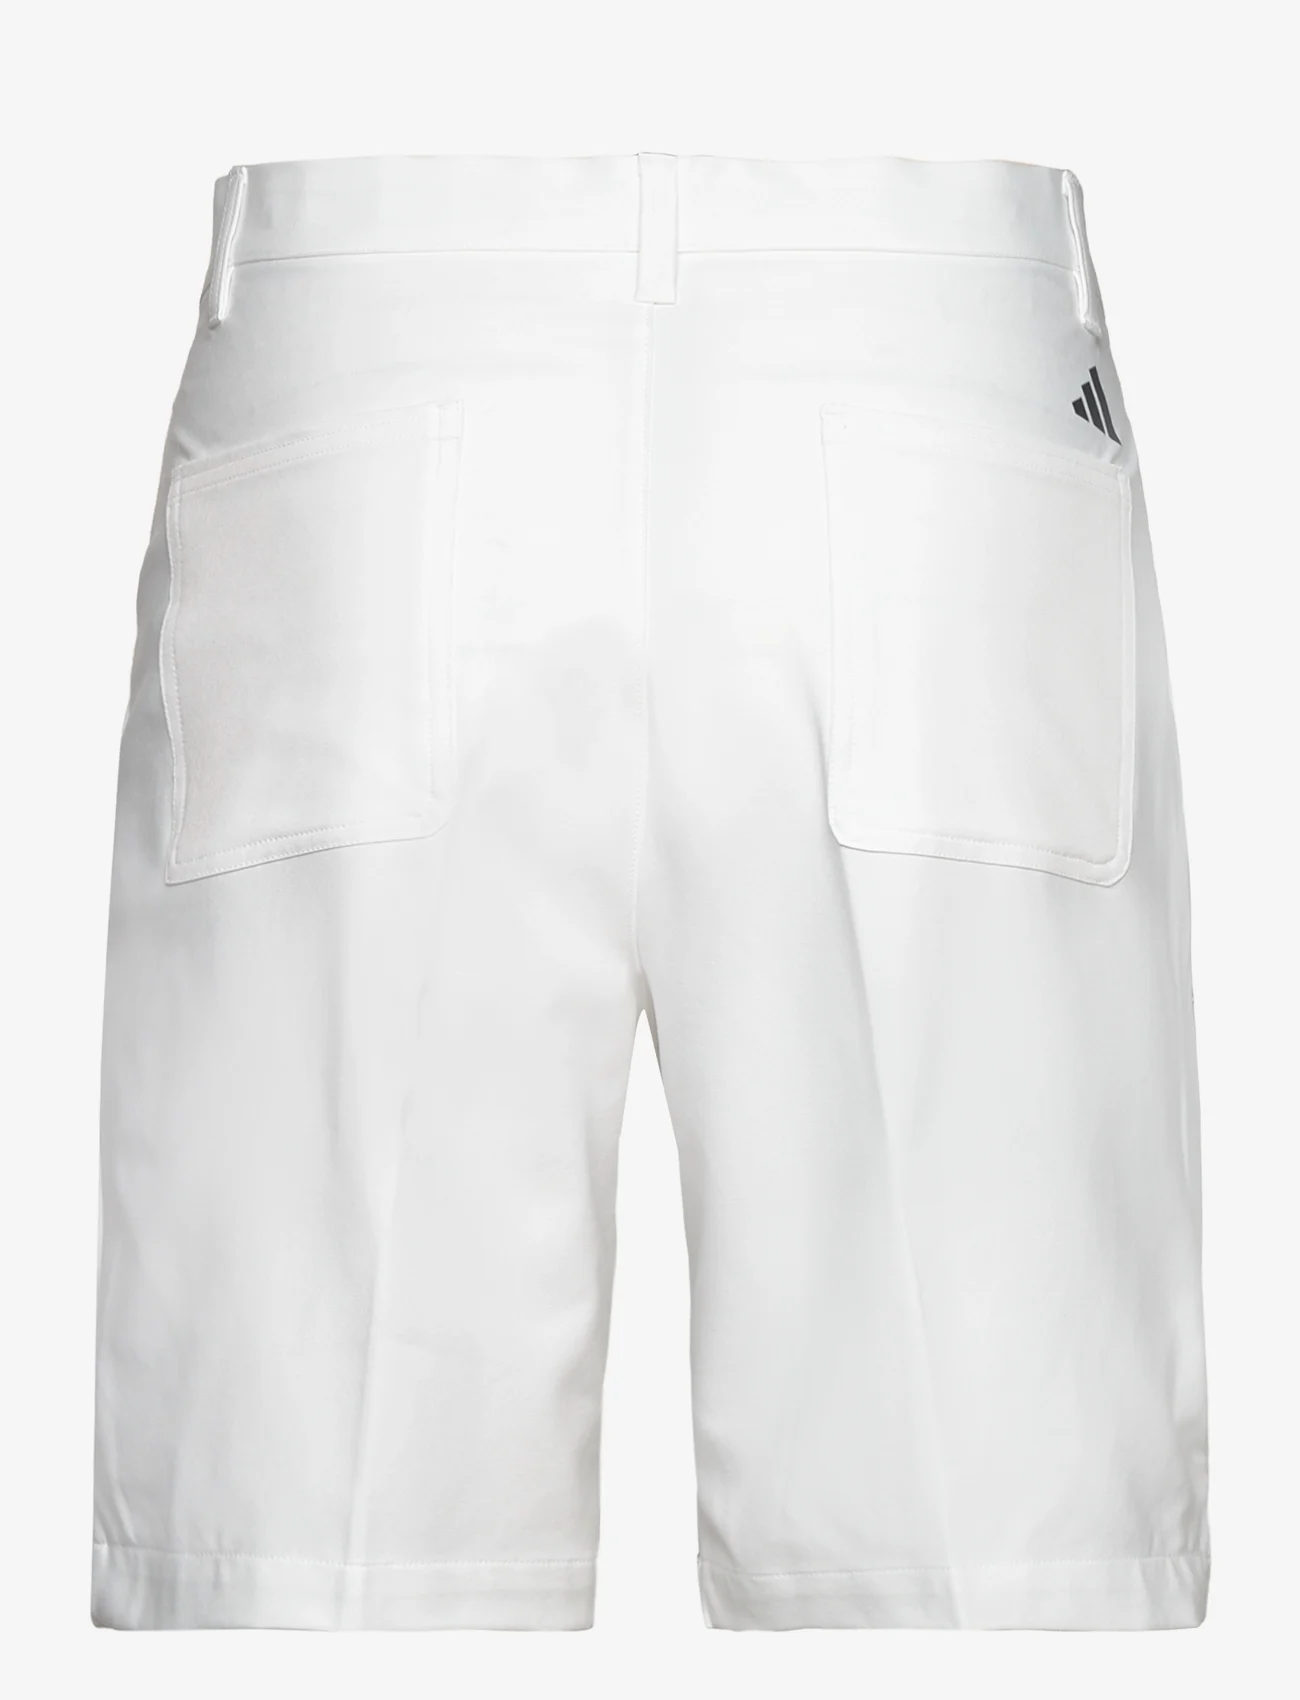 adidas Golf - UTILITY SHORT - sports shorts - white - 1